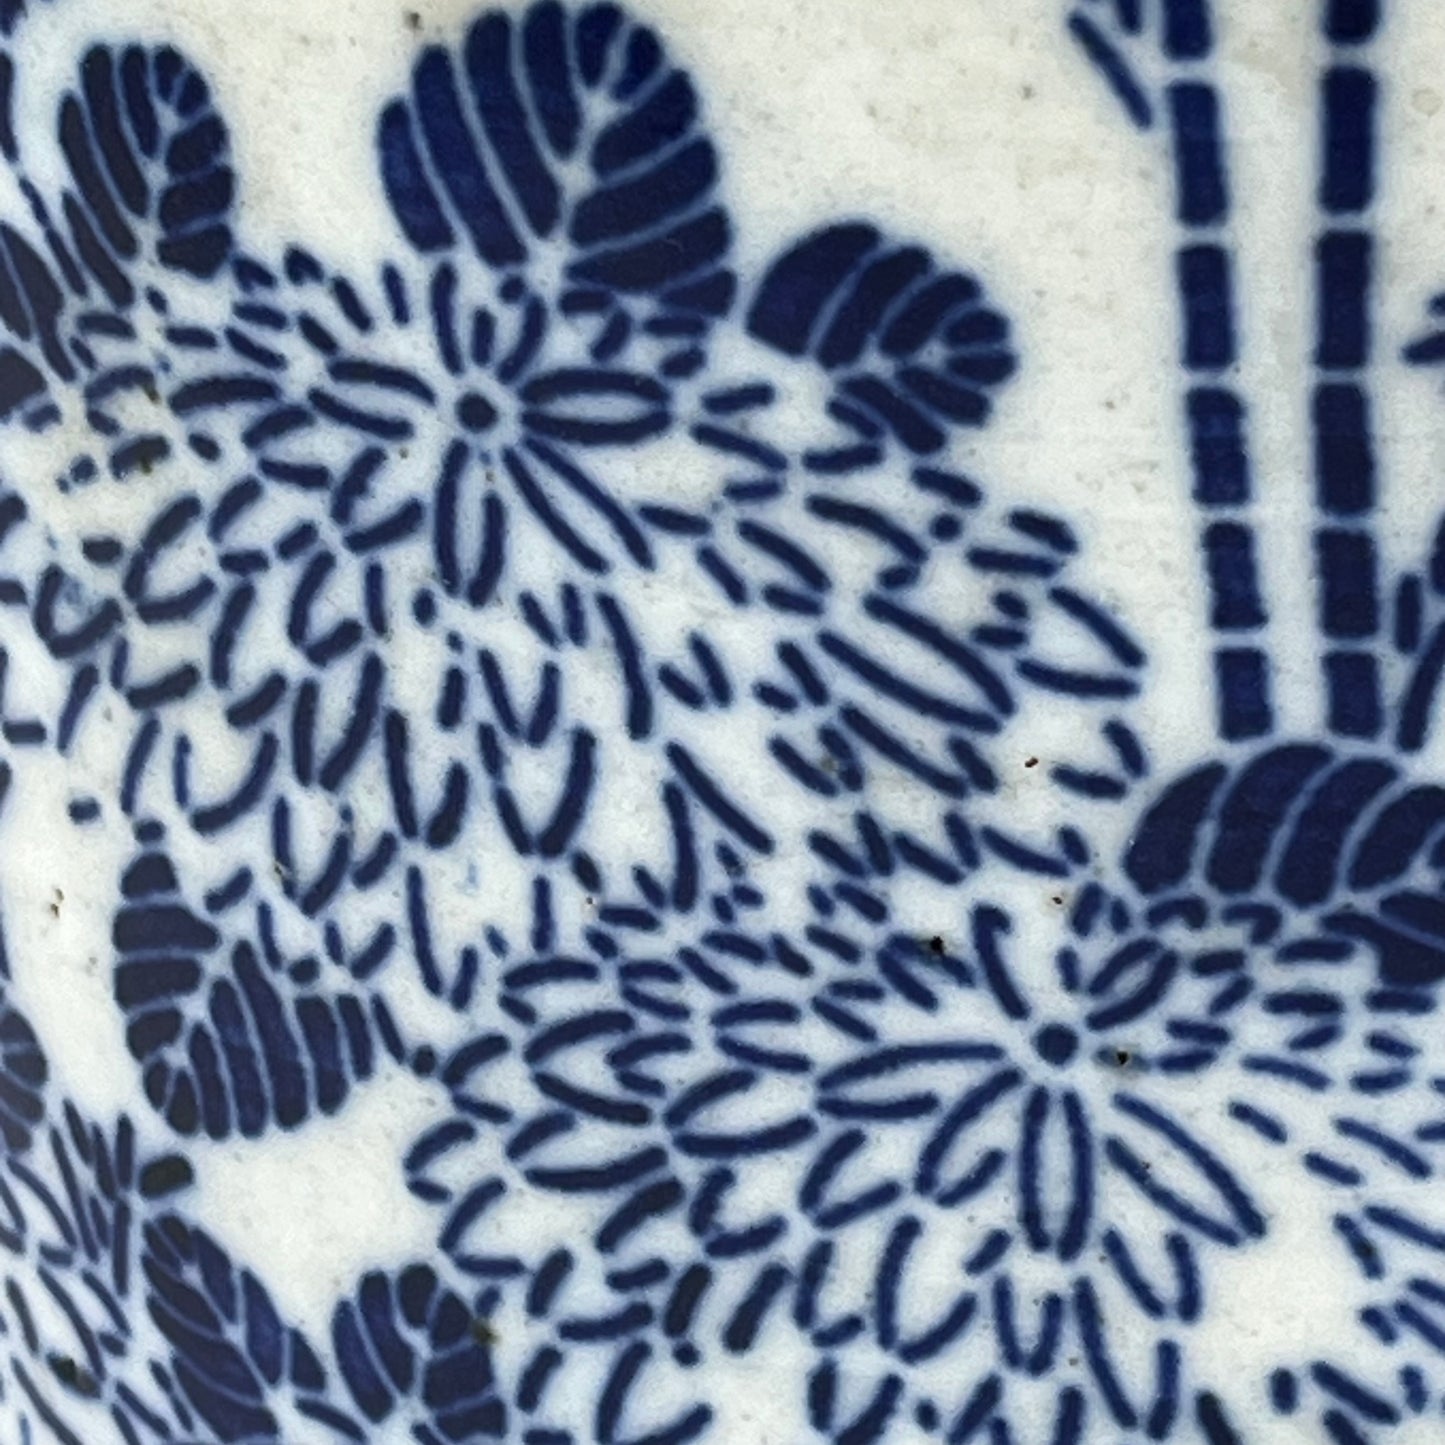 Antique Japanese Meiji Era small  Ceramic Blue & White Hibachi Brazier 6”